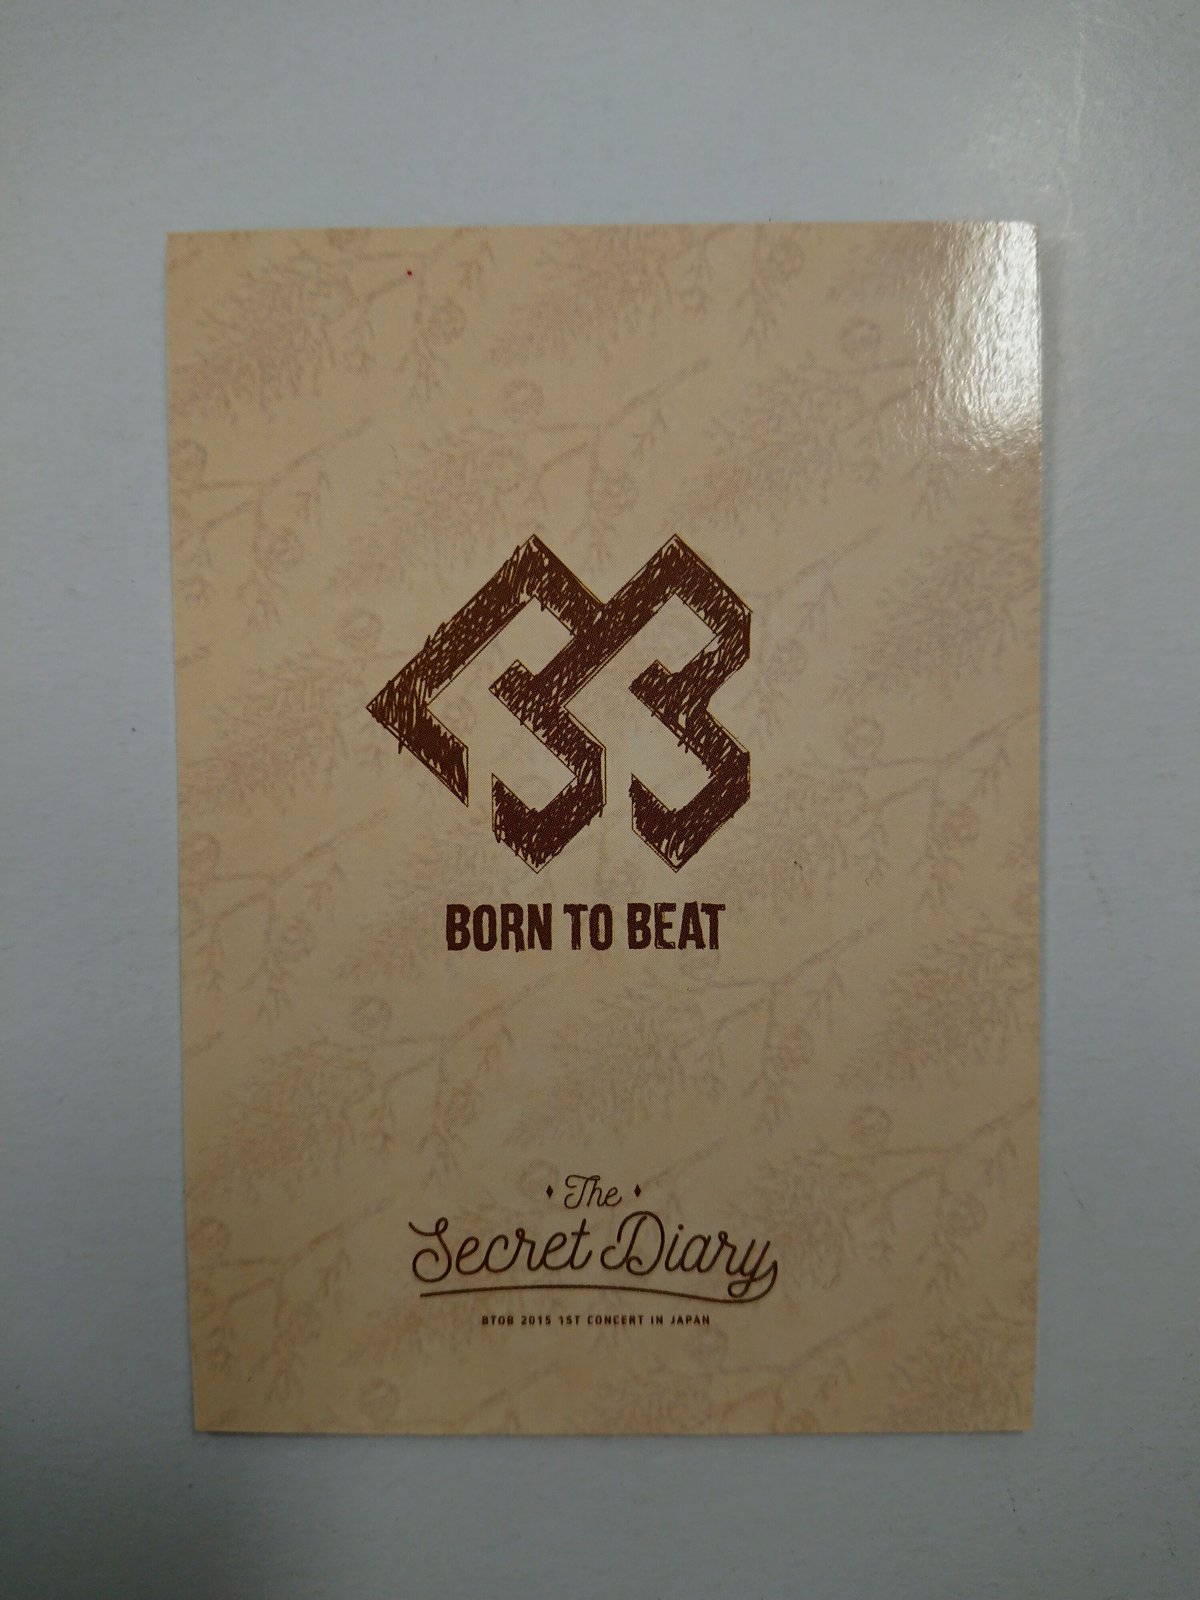 BTOB 【The Secret Diary】公式 コンサートLIVE DVD - DVD/ブルーレイ